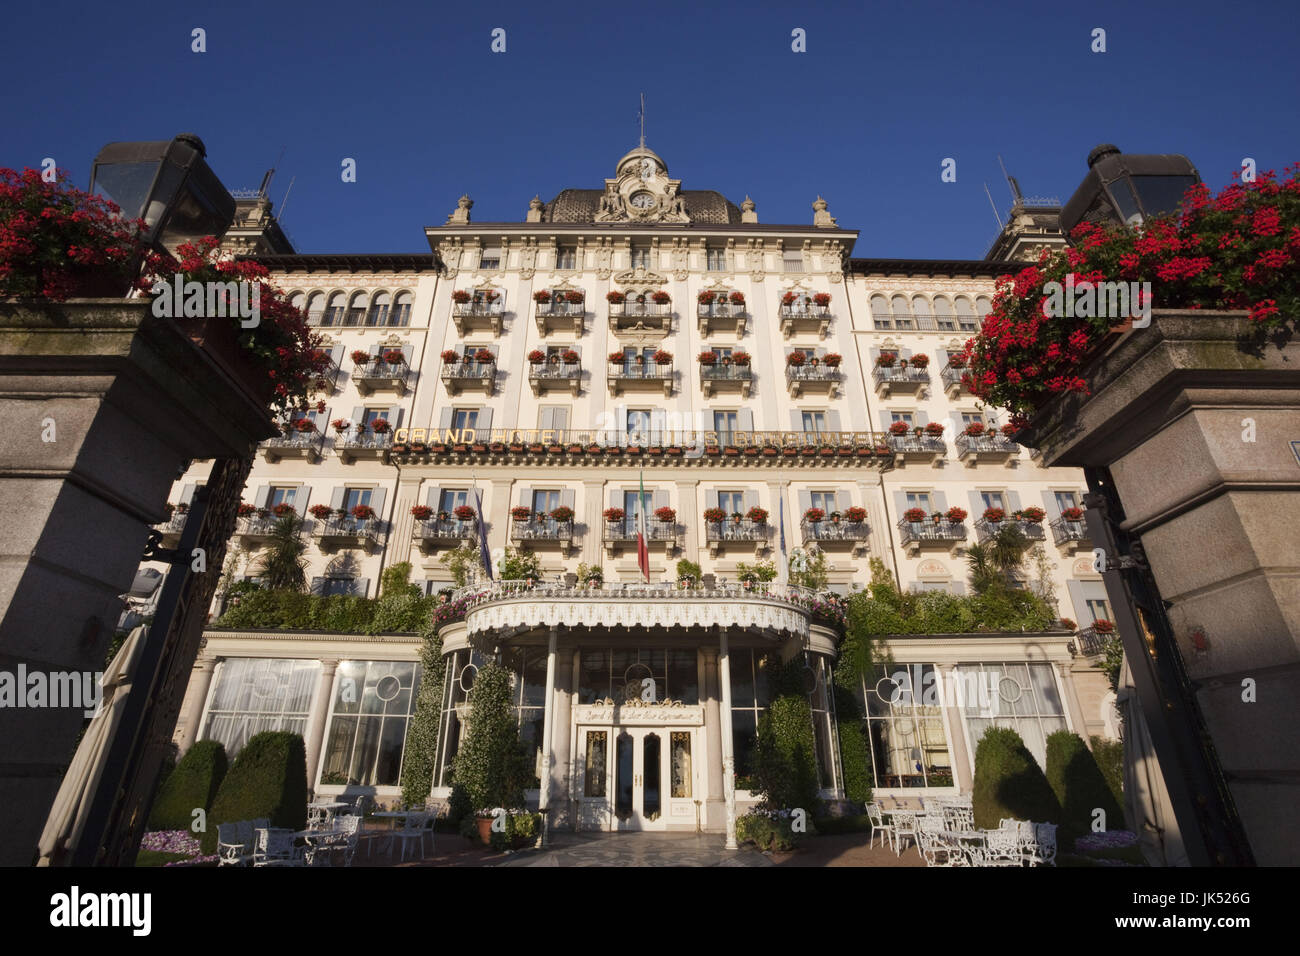 Italy, Piedmont, Lake Maggiore, Stresa, Grand Hotel des Iles Borromees, morning Stock Photo